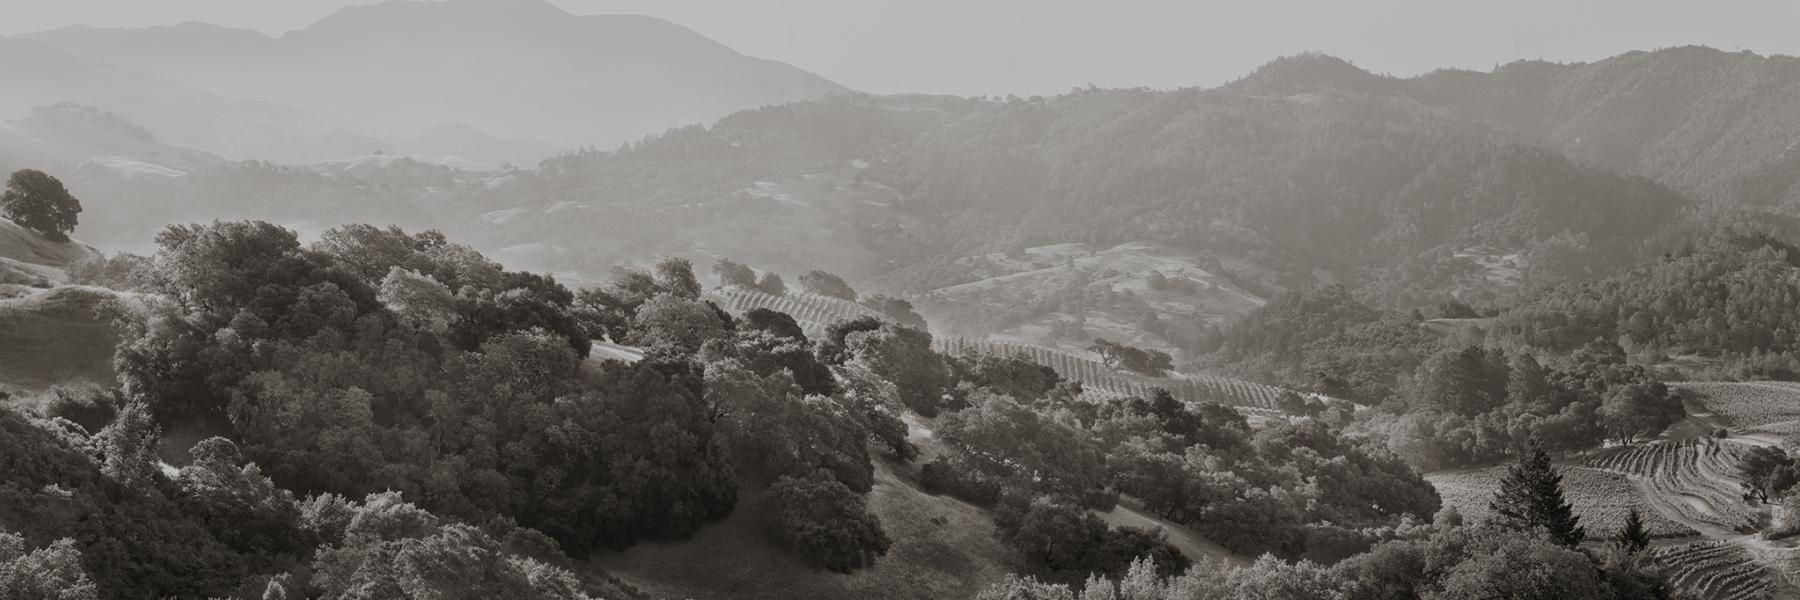 Hilltop and ridgeline vineyards at Stonestreet Mountain Estate, Alexander Valley, Sonoma County, California 